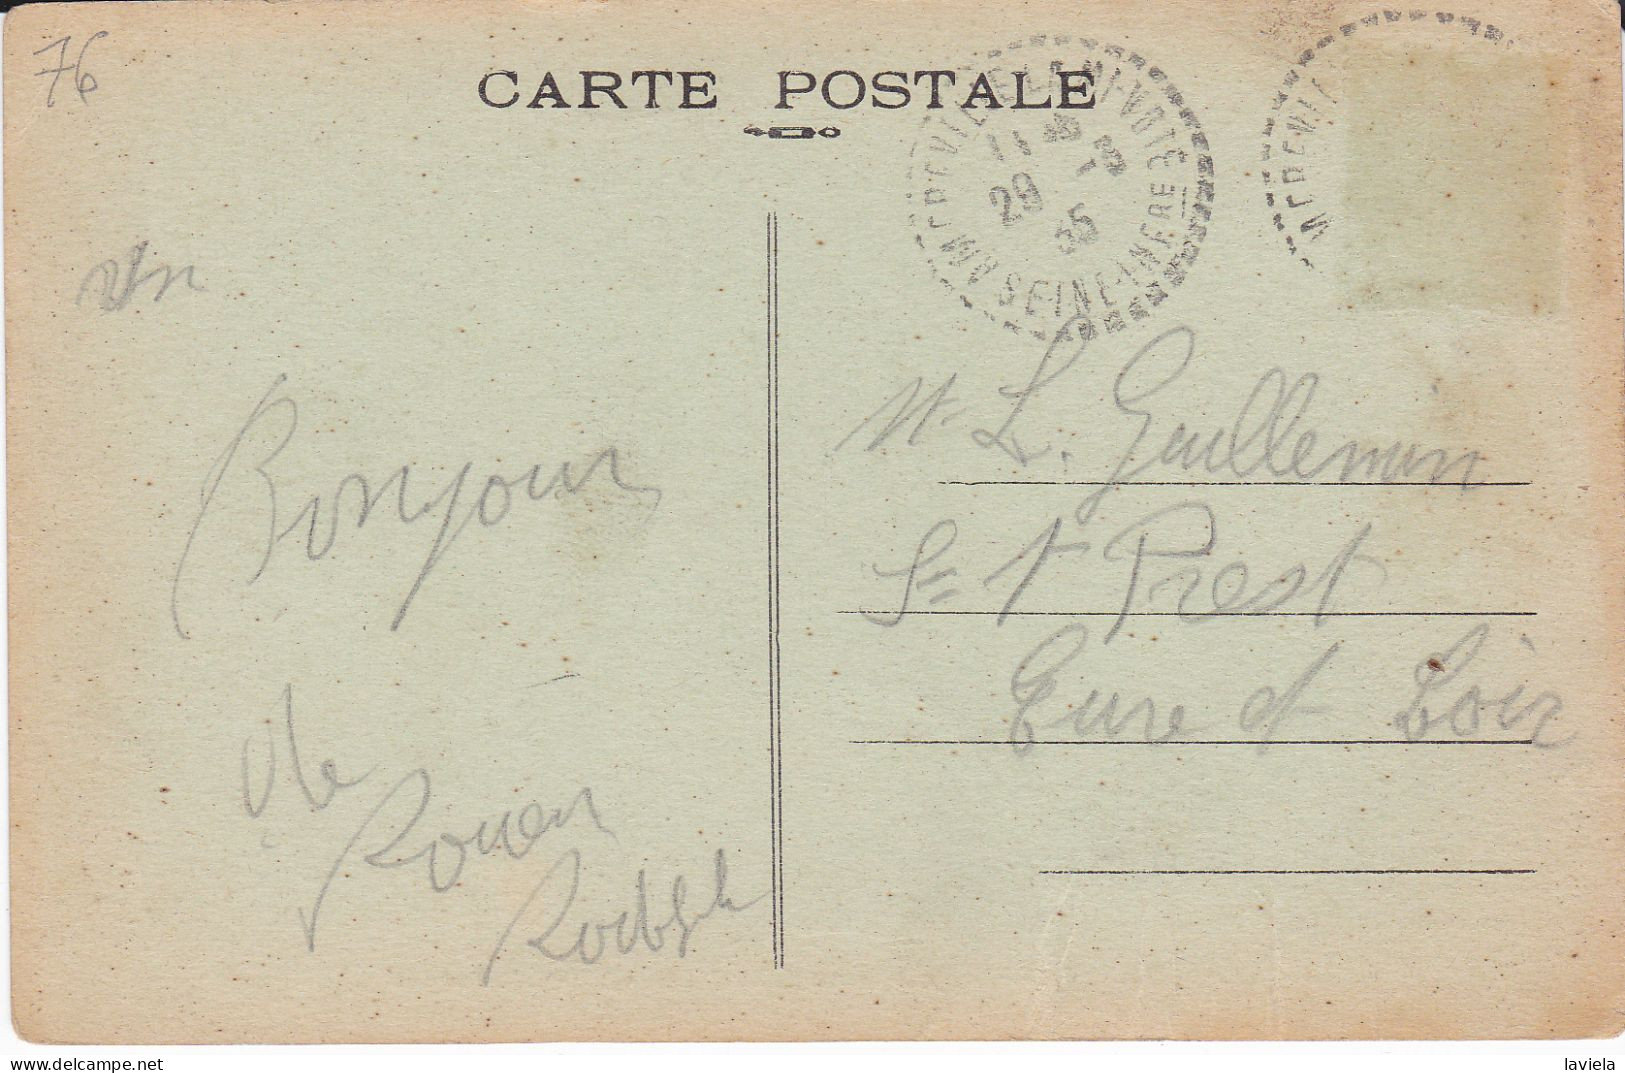 76 SAINT-ADRIEN - Près Rouen (Seine Inf.) - Vallée Du Becquet - Circulée 1935 - Sonstige & Ohne Zuordnung